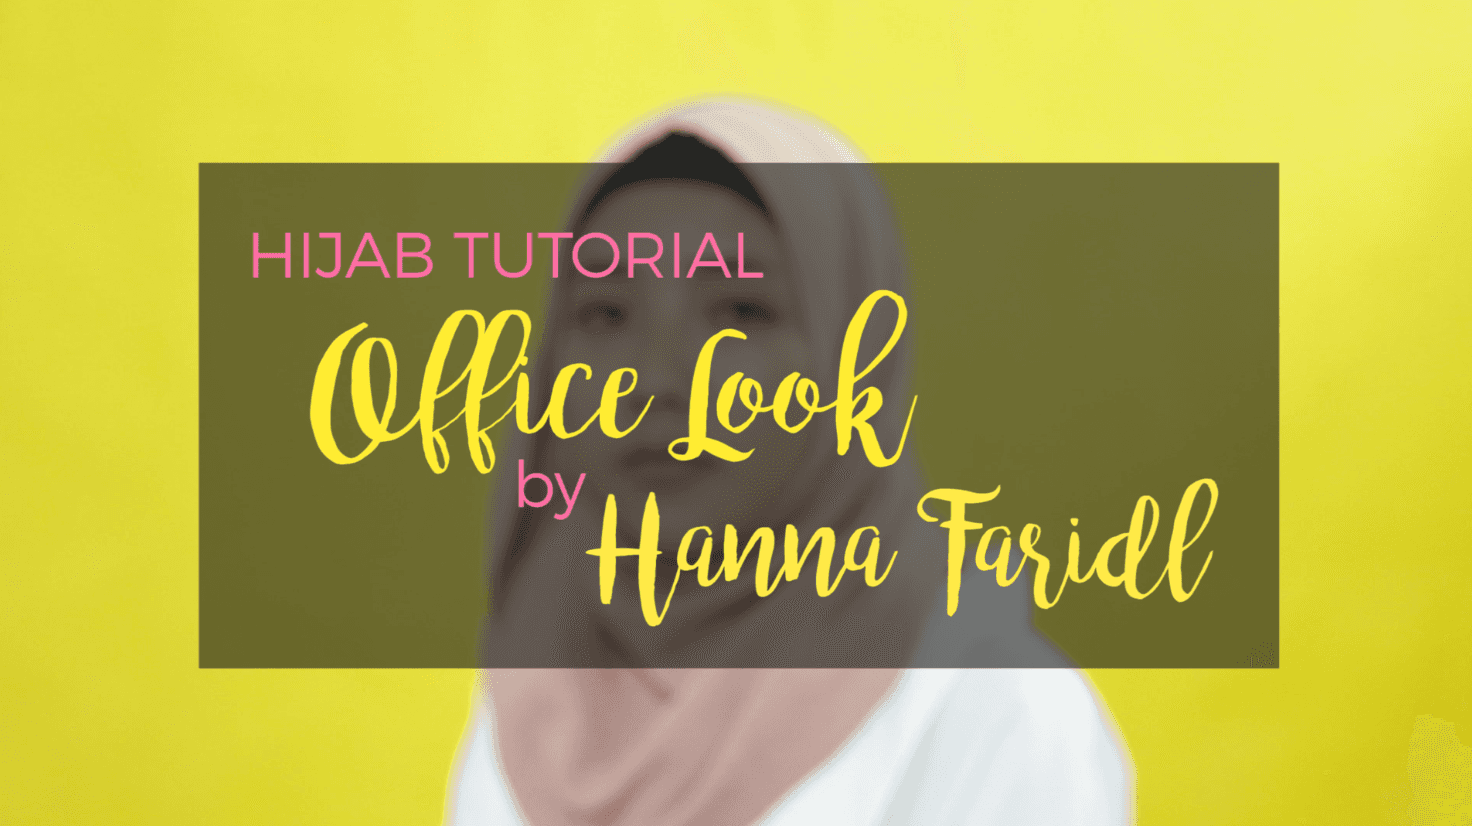 Hijab Tutorial Office Look by Hanna Faridl